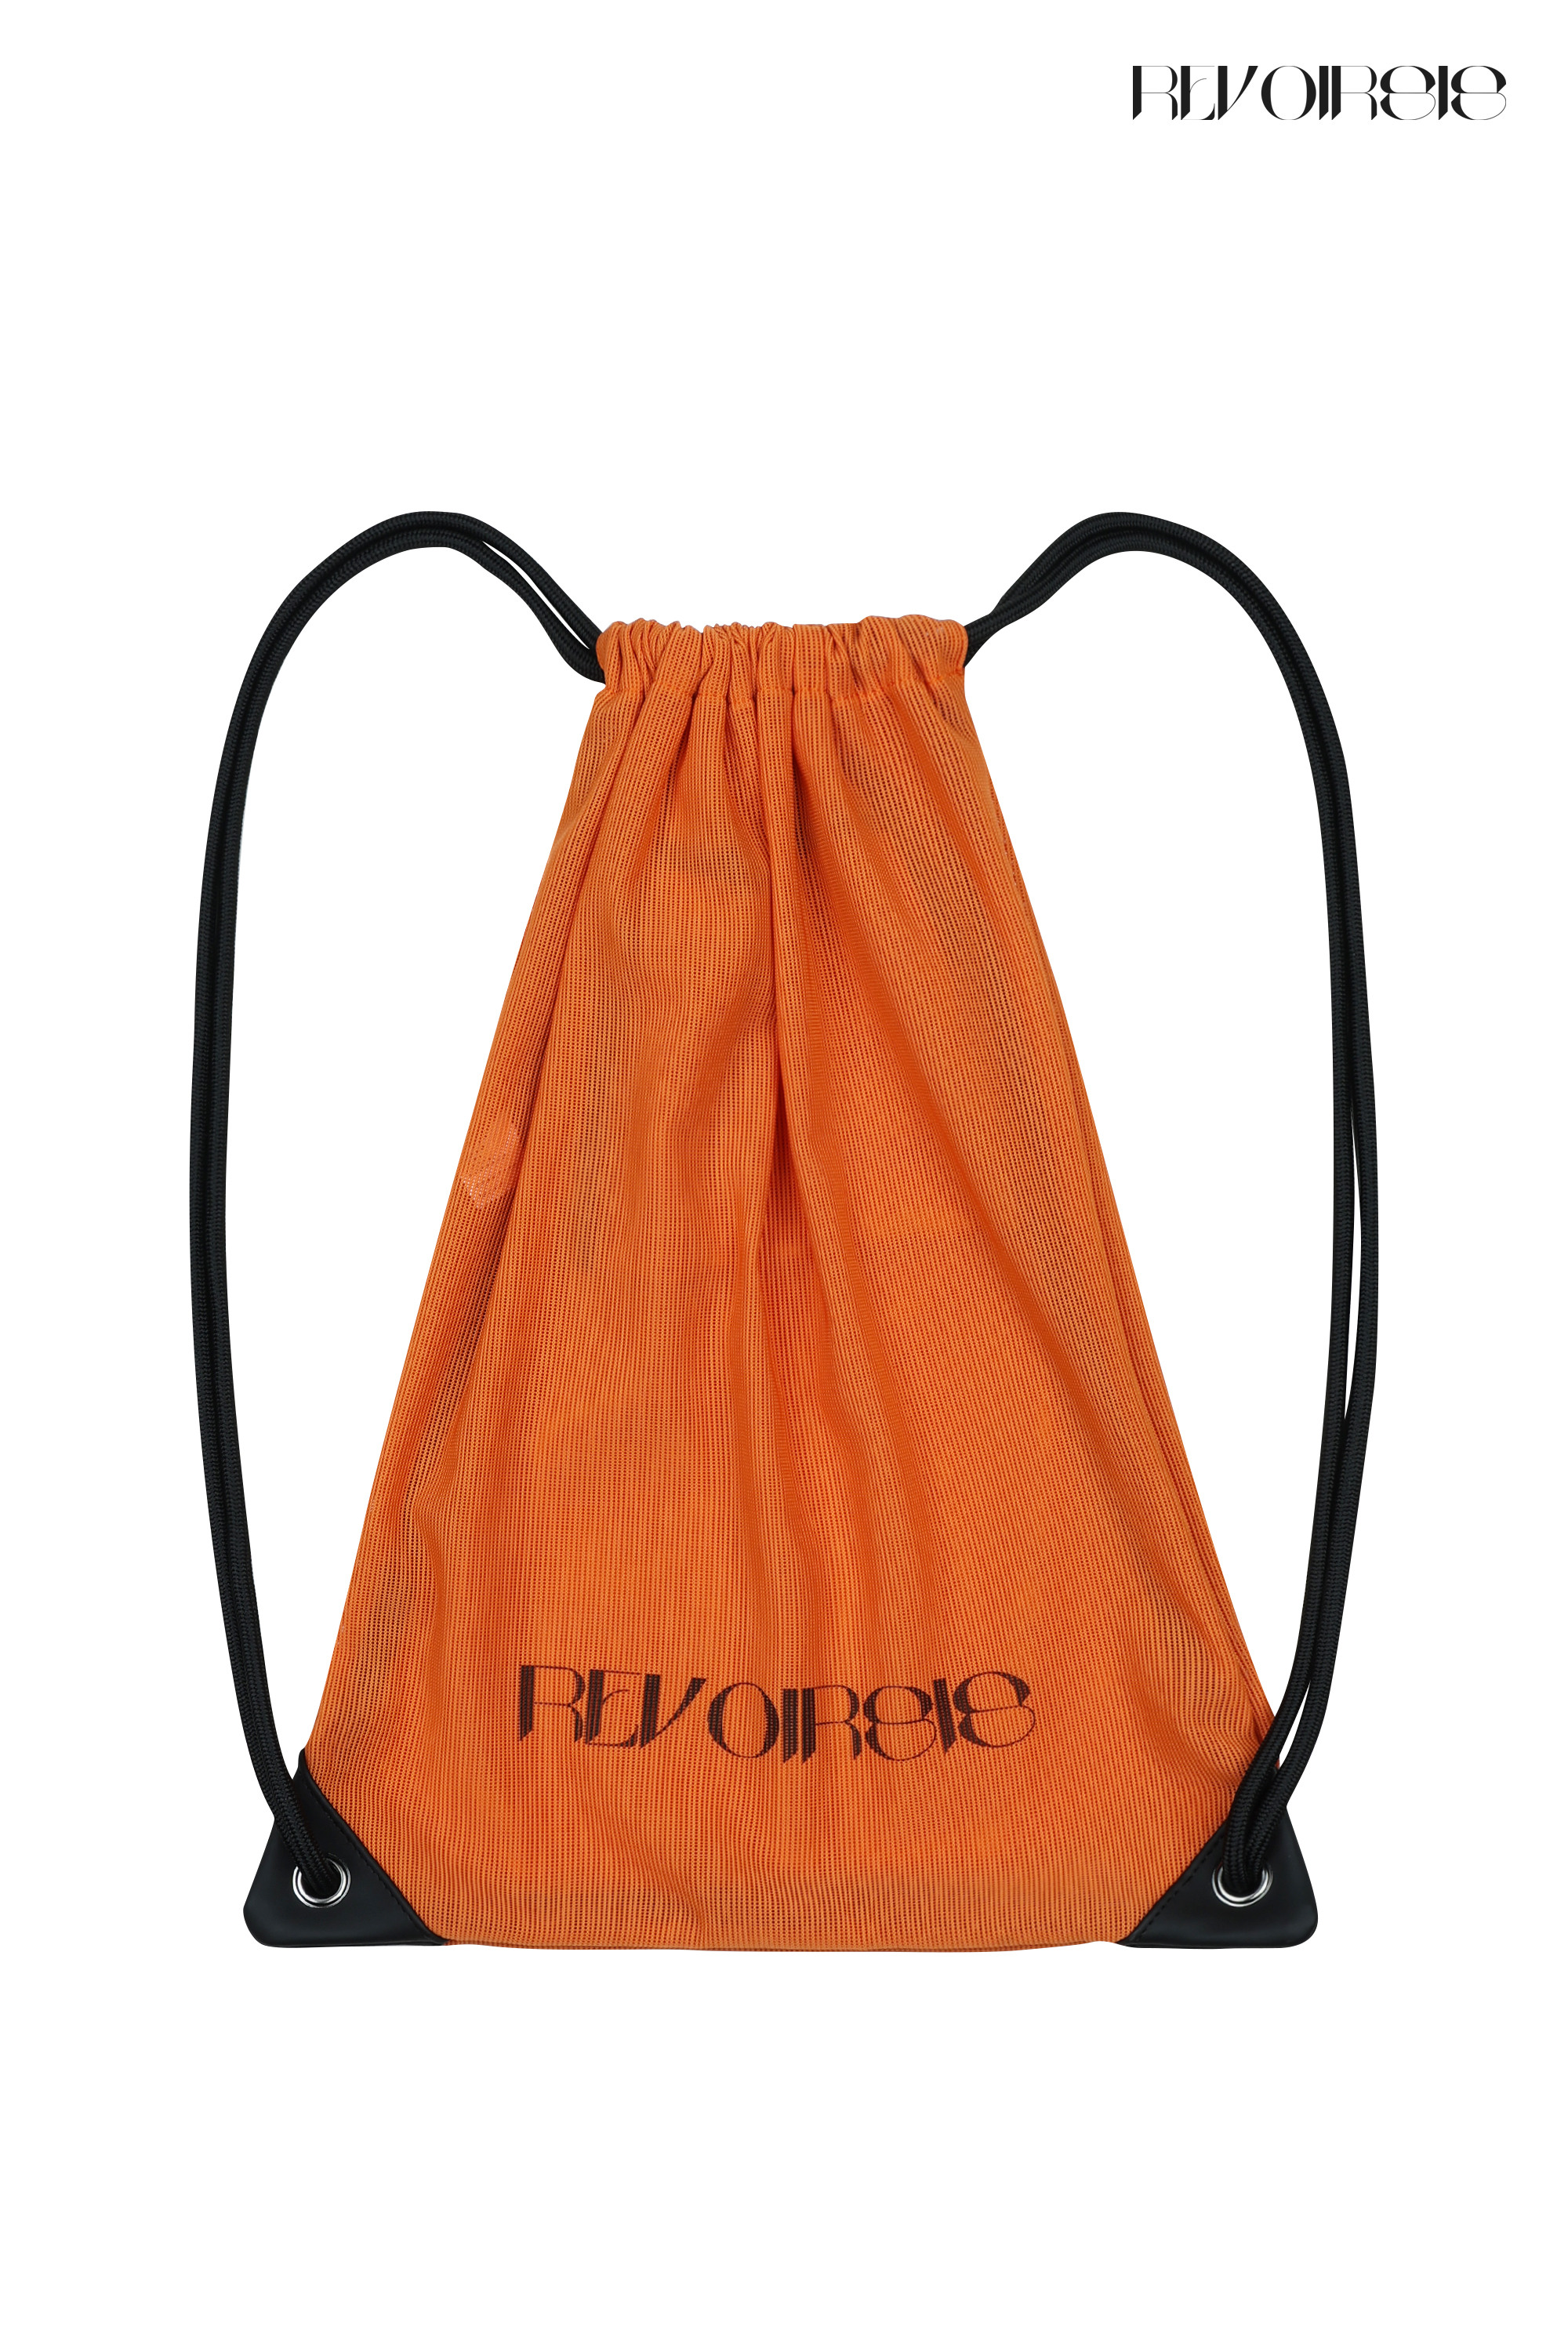 RVIS-mash-backpack-orange-1.jpg